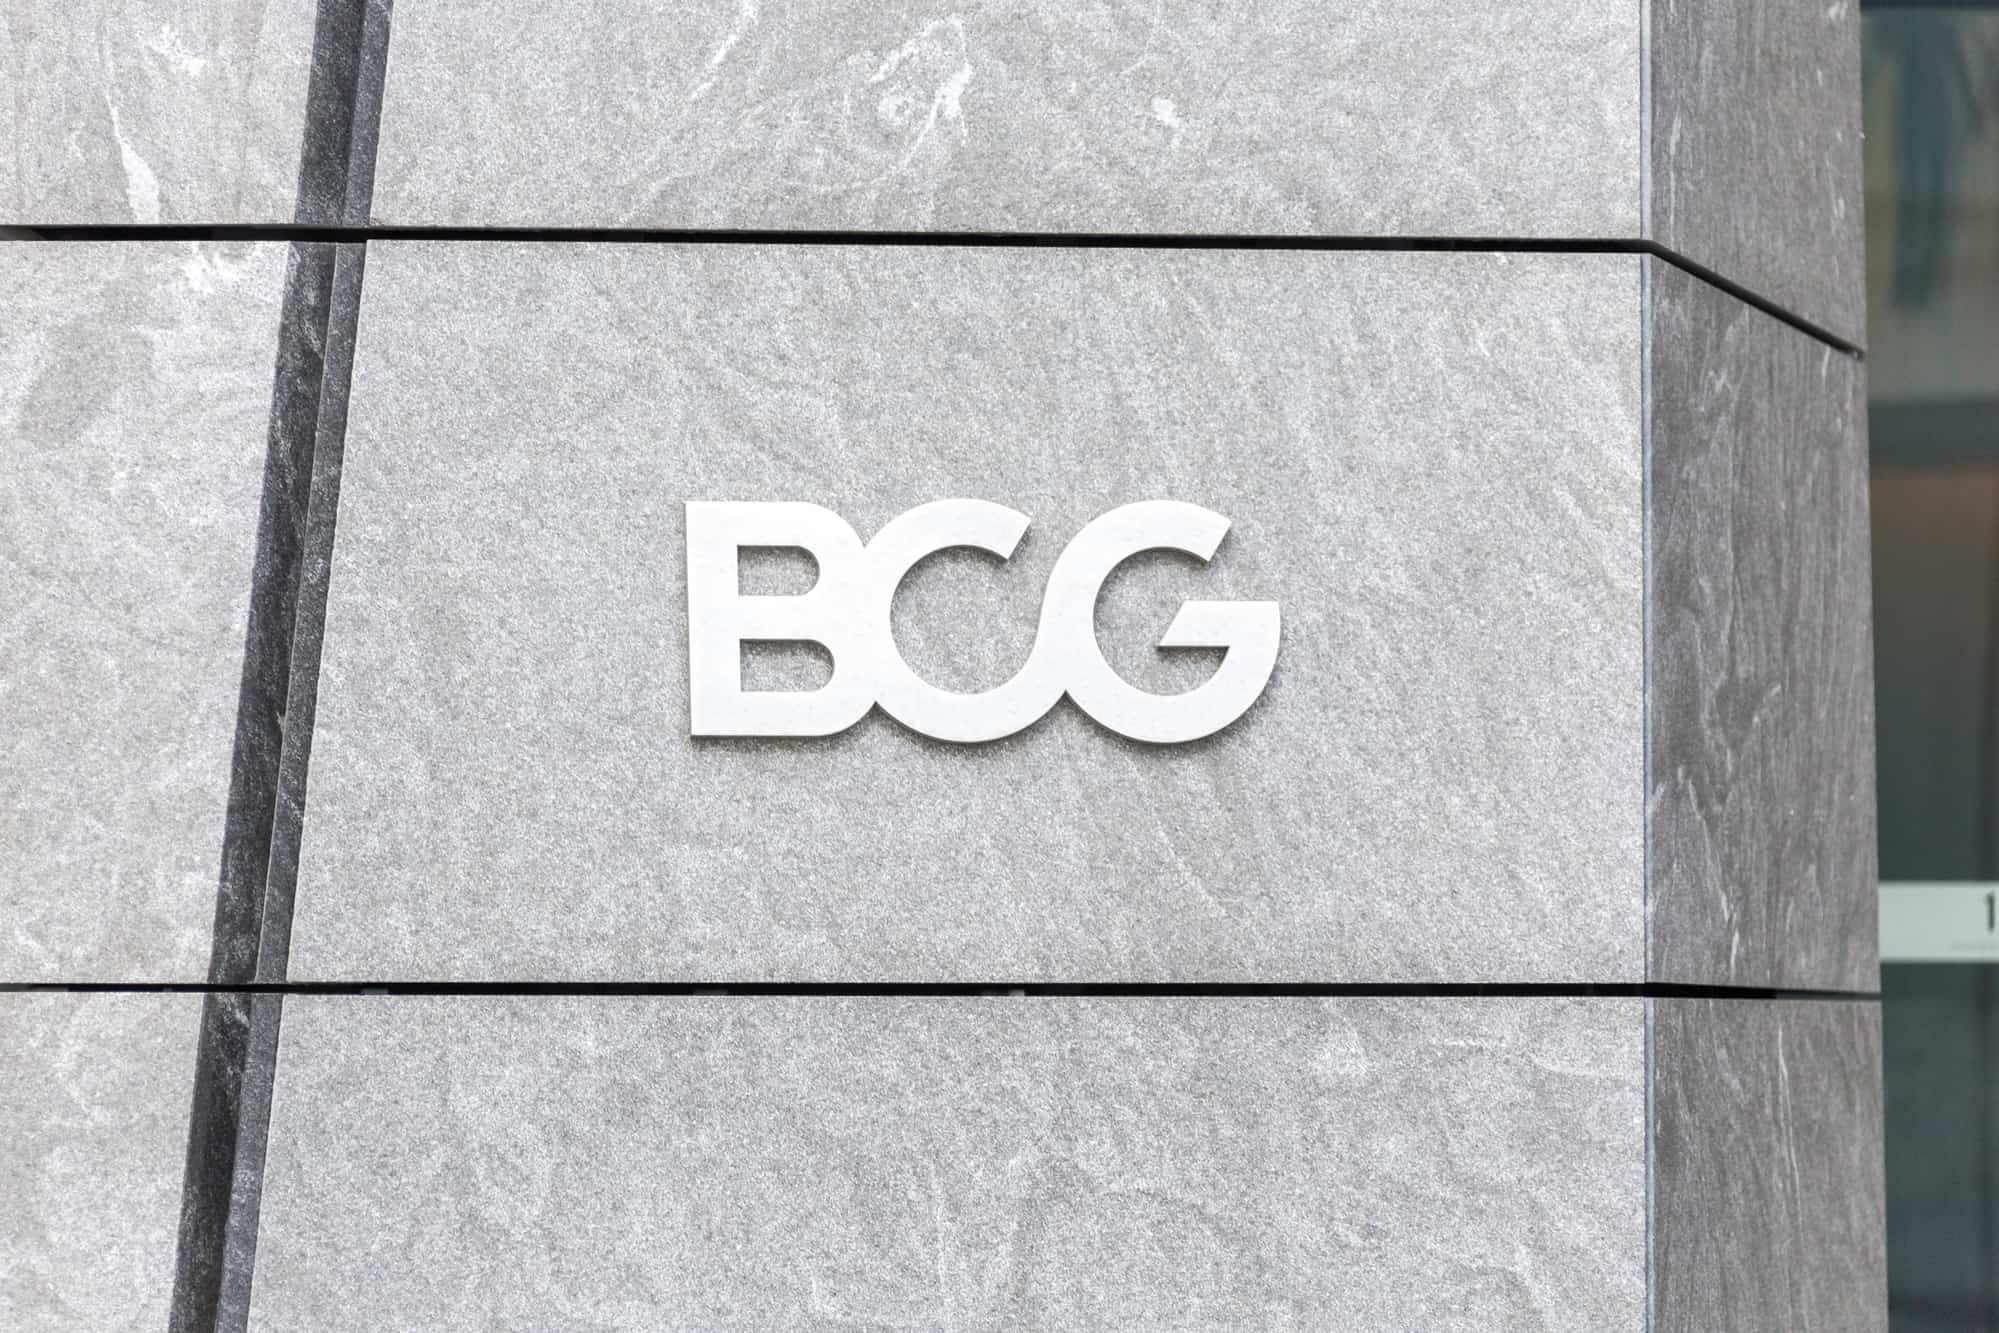 BCG logo on building